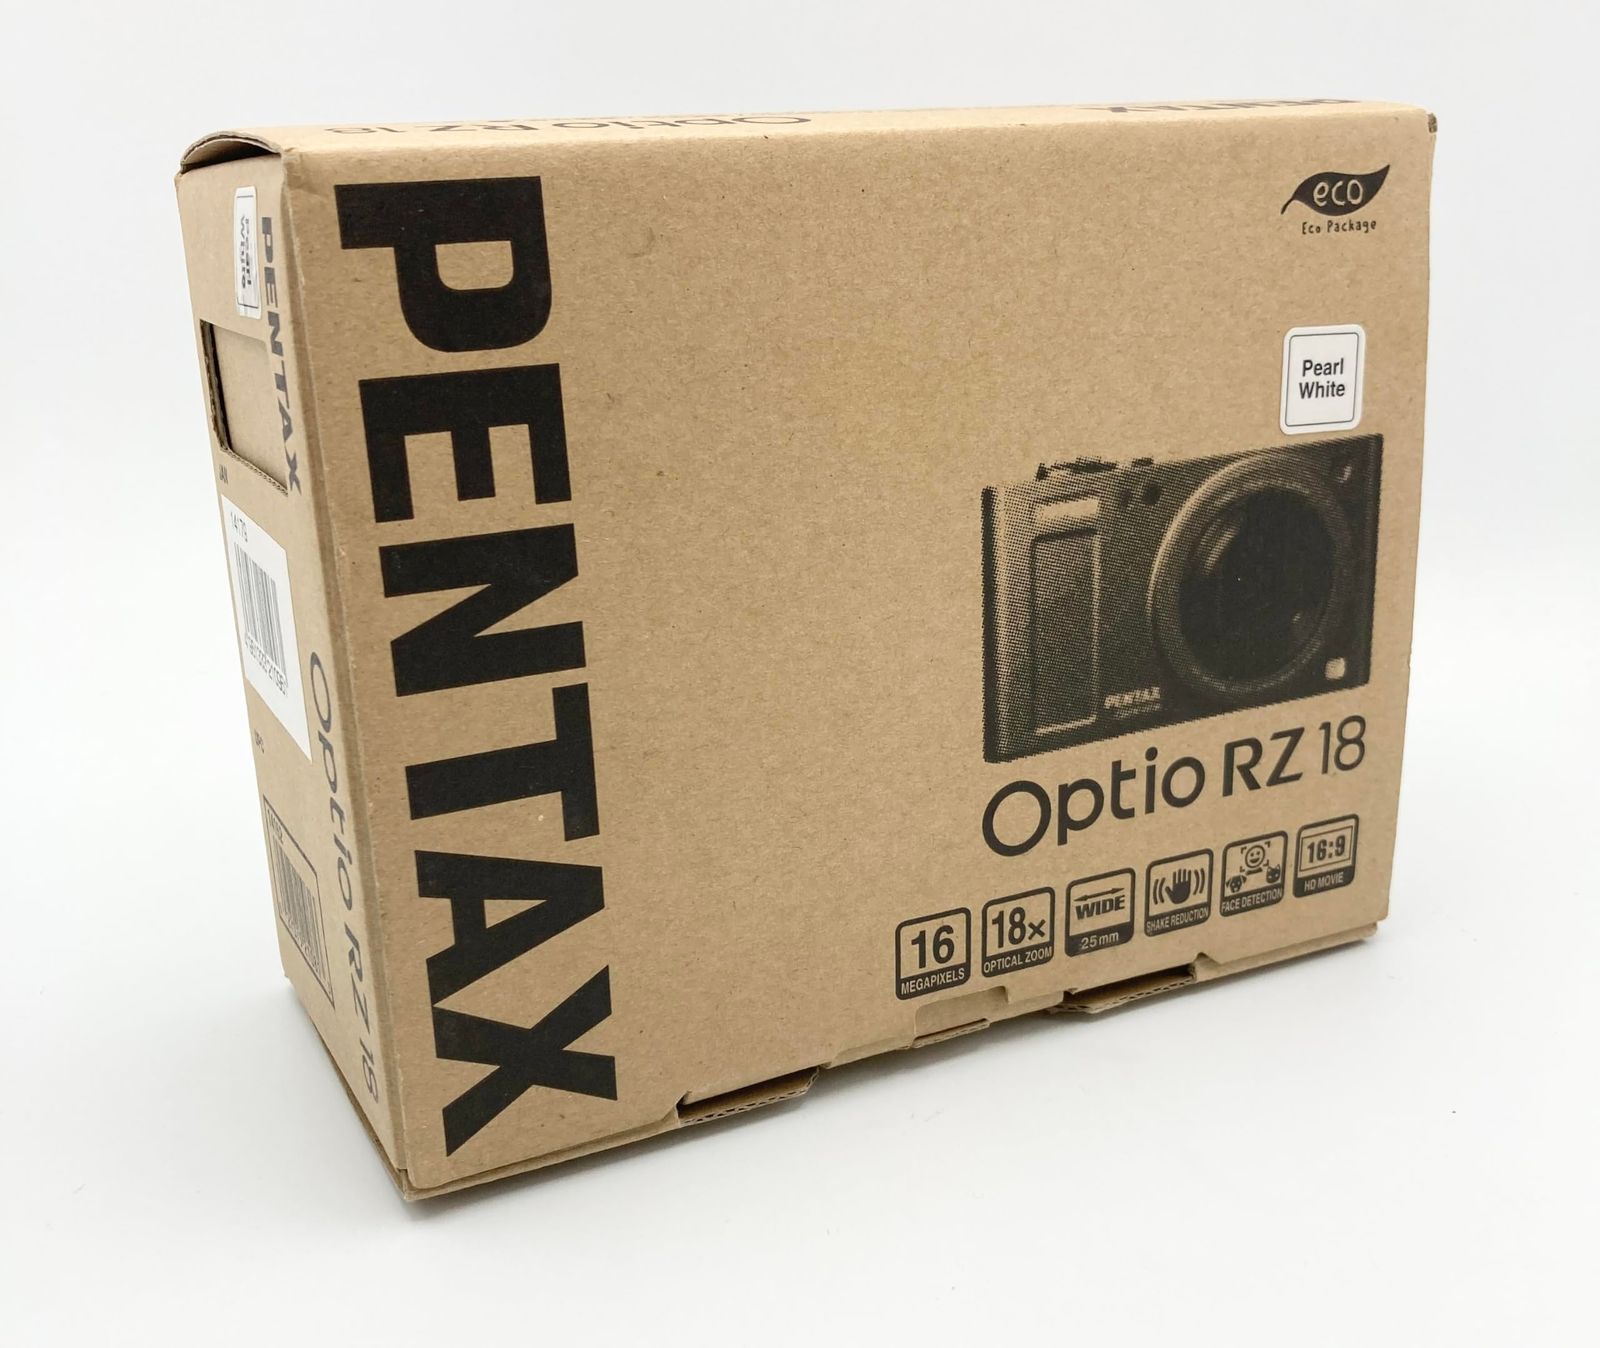 PENTAX デジタルカメラ Optio RZ18(パールホワイト)1600万画素 25mm 光学18倍 小型軽量 OPTIORZ18WH - メルカリ